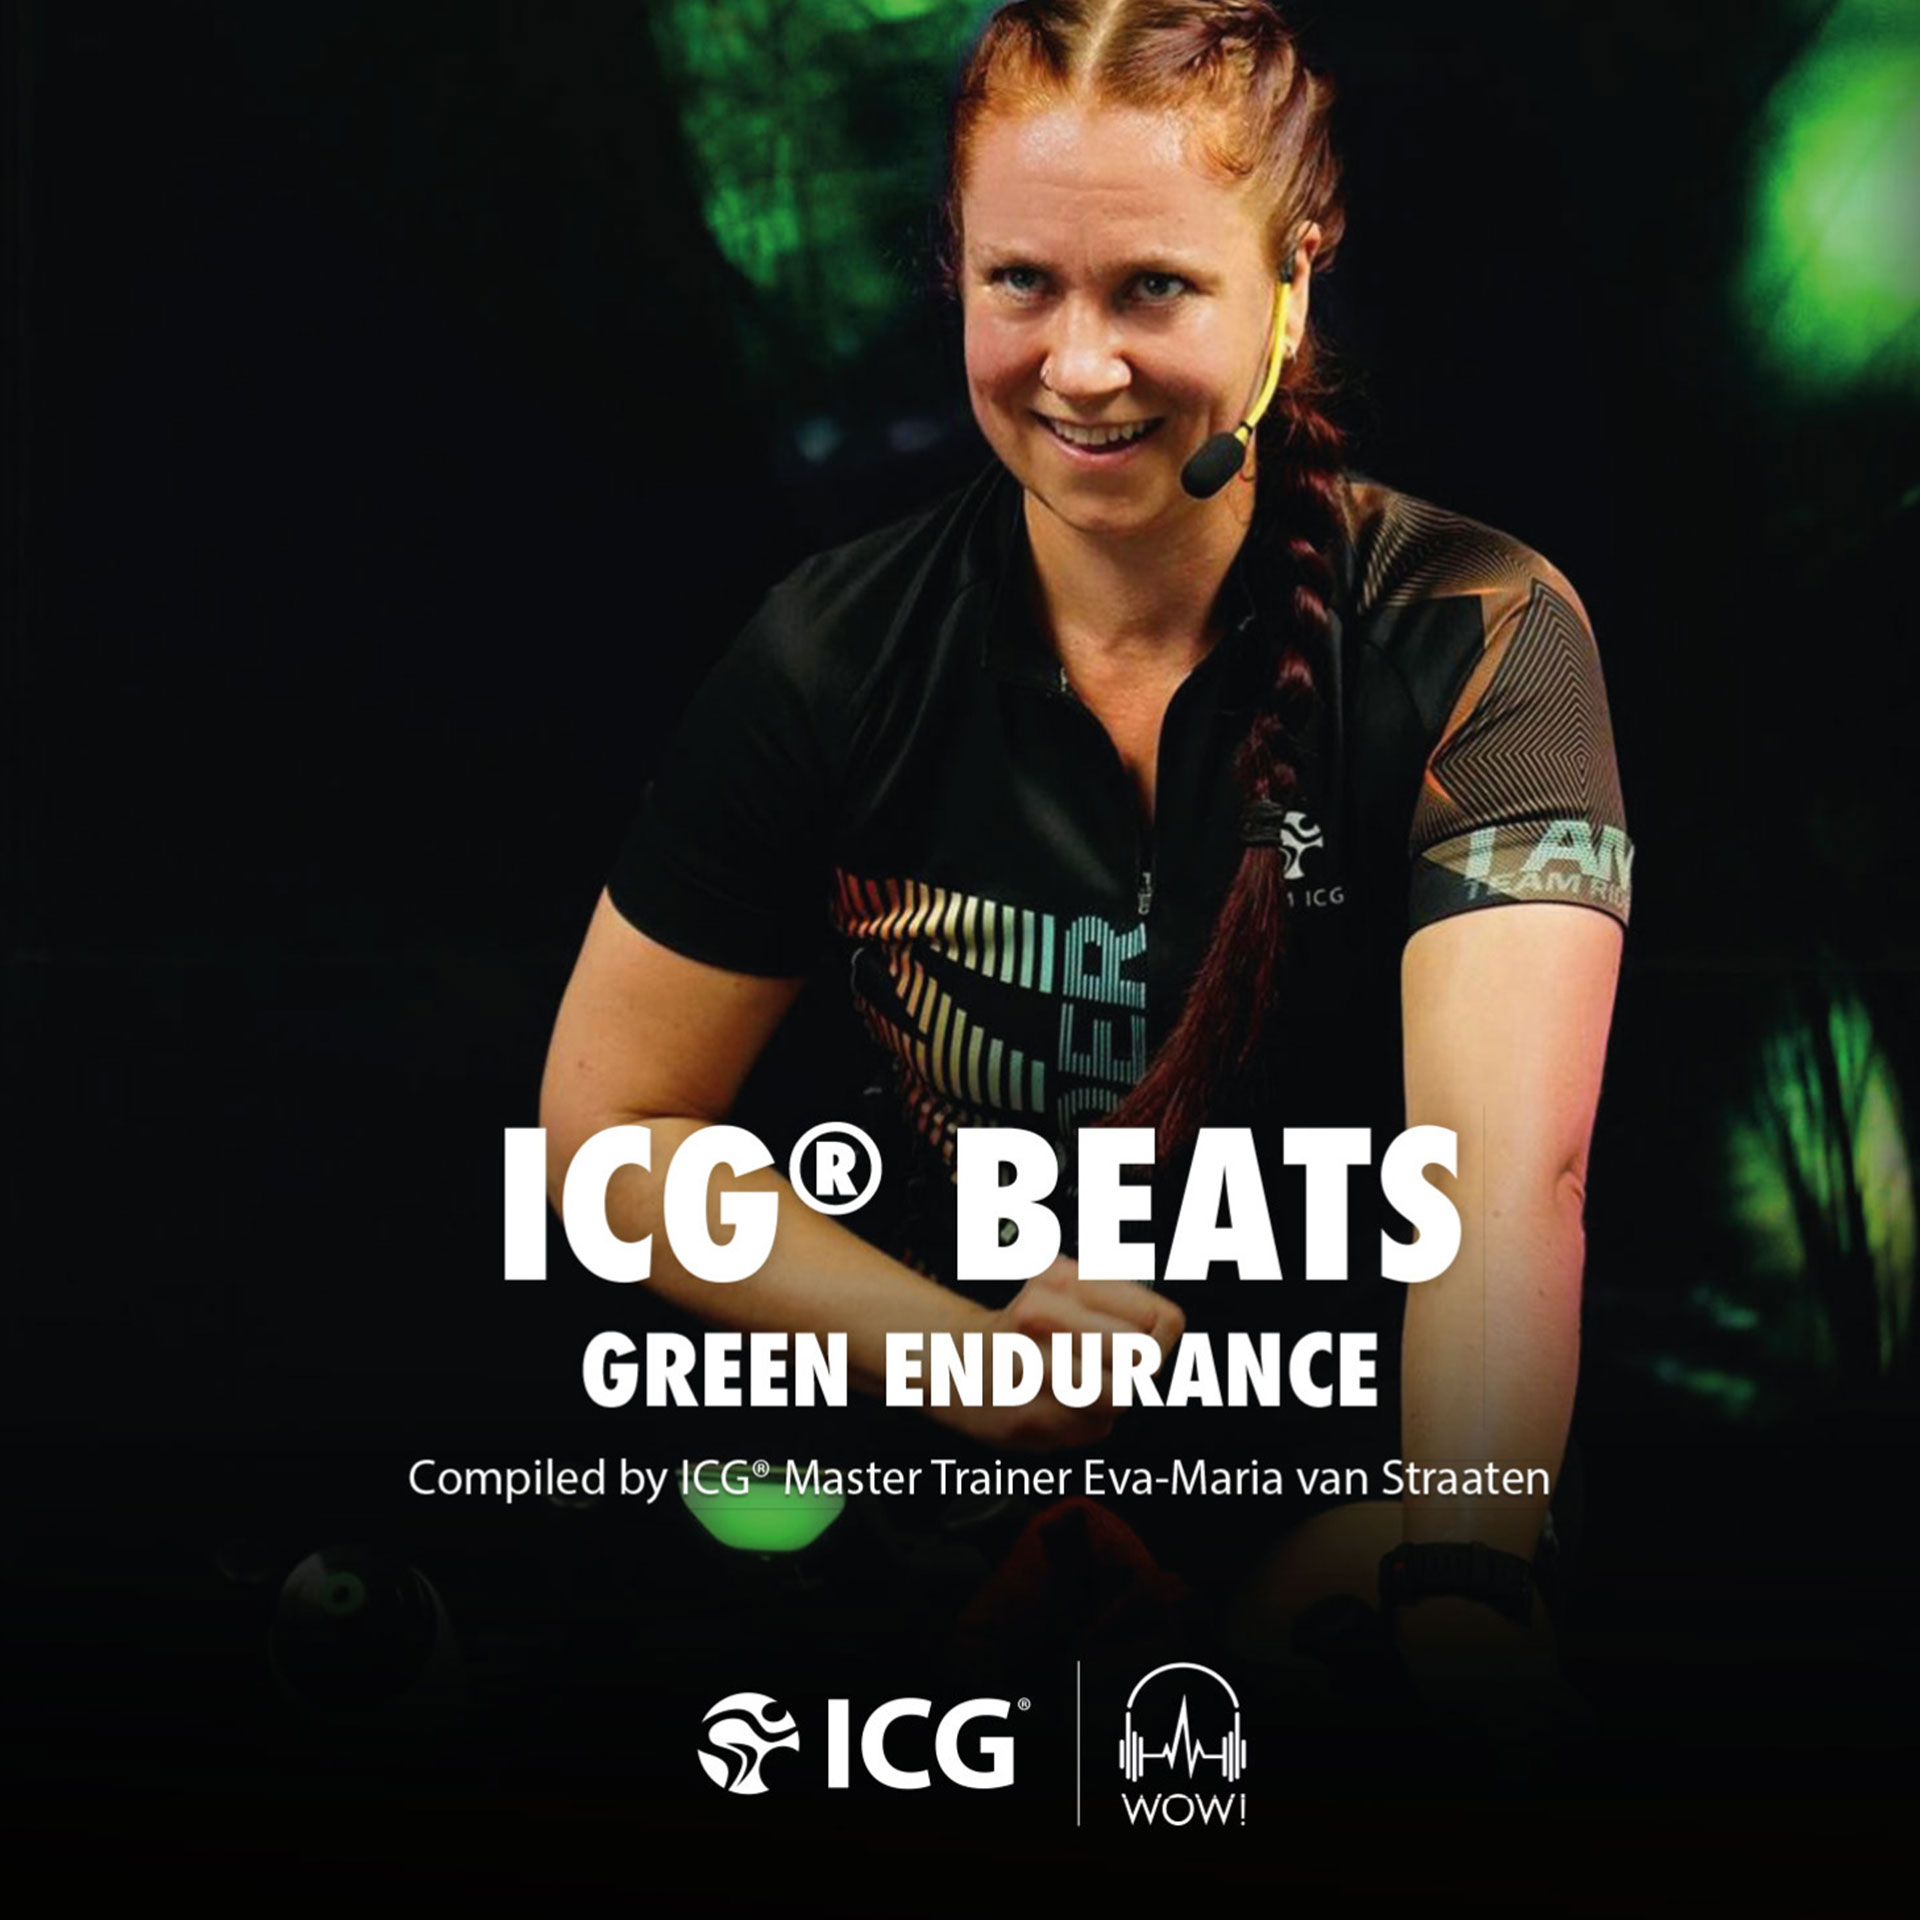 Cycling-CD "ICG Beats - Green Endurance"